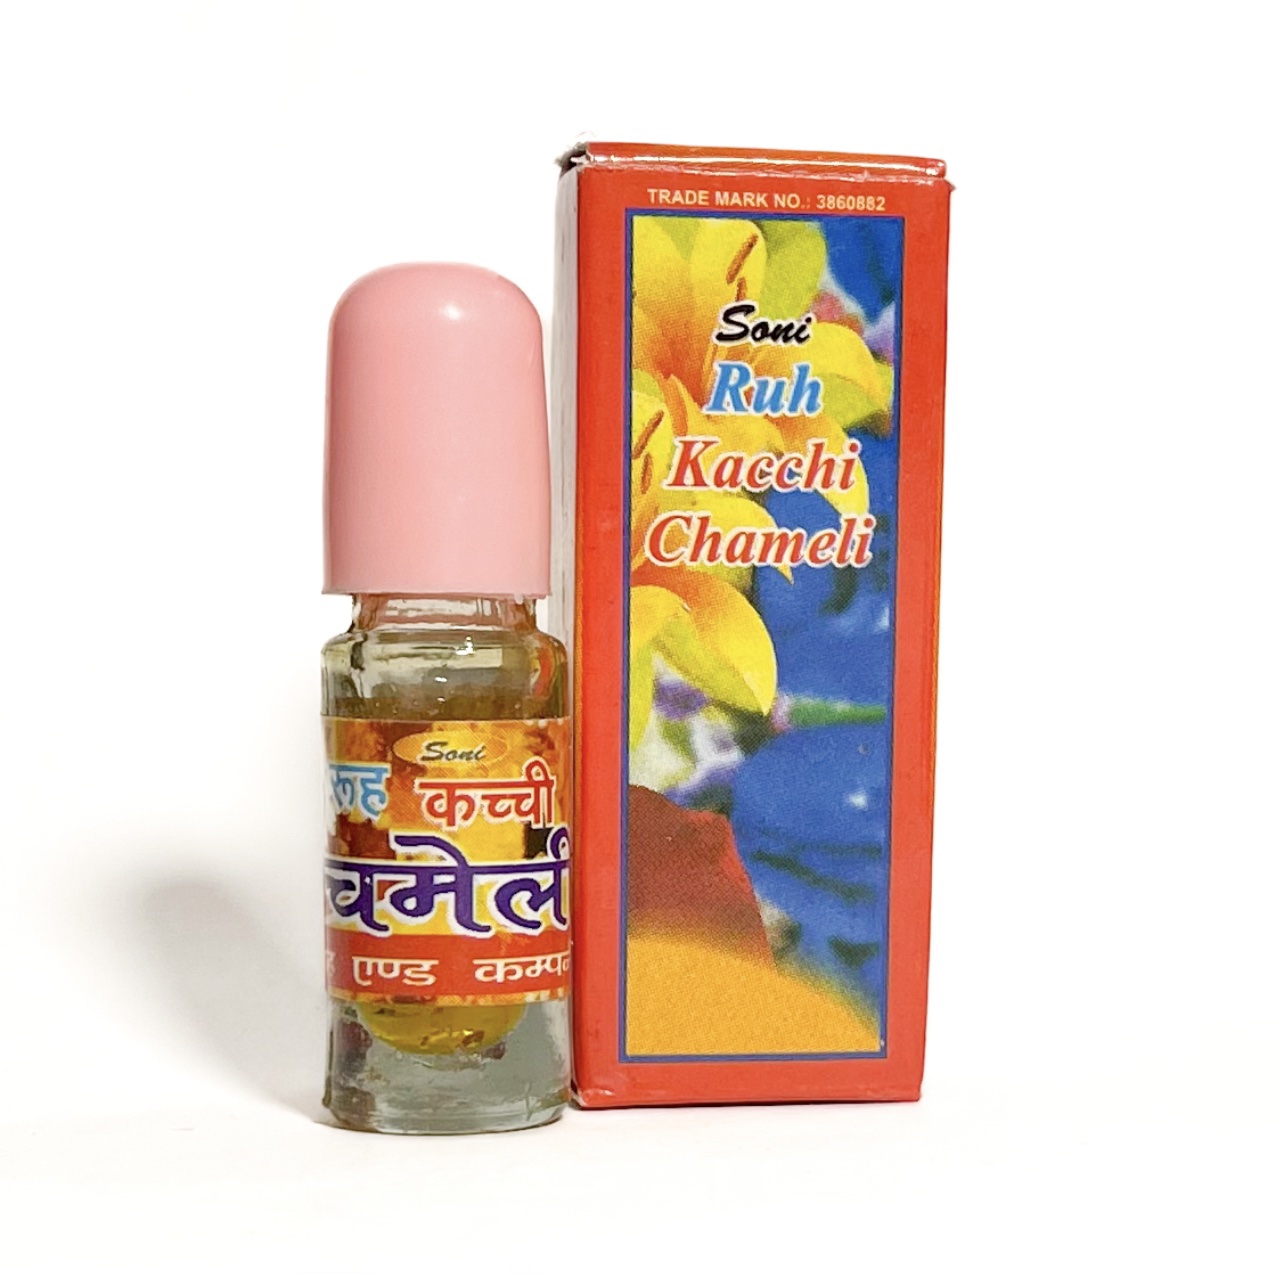 RUH KACCHI CHAMELI Fragrance, Soni Shah (РУХ КАЧЧИ ХАМЕЛИ, Индийские масляные духи, Сони Шан), 3 мл.